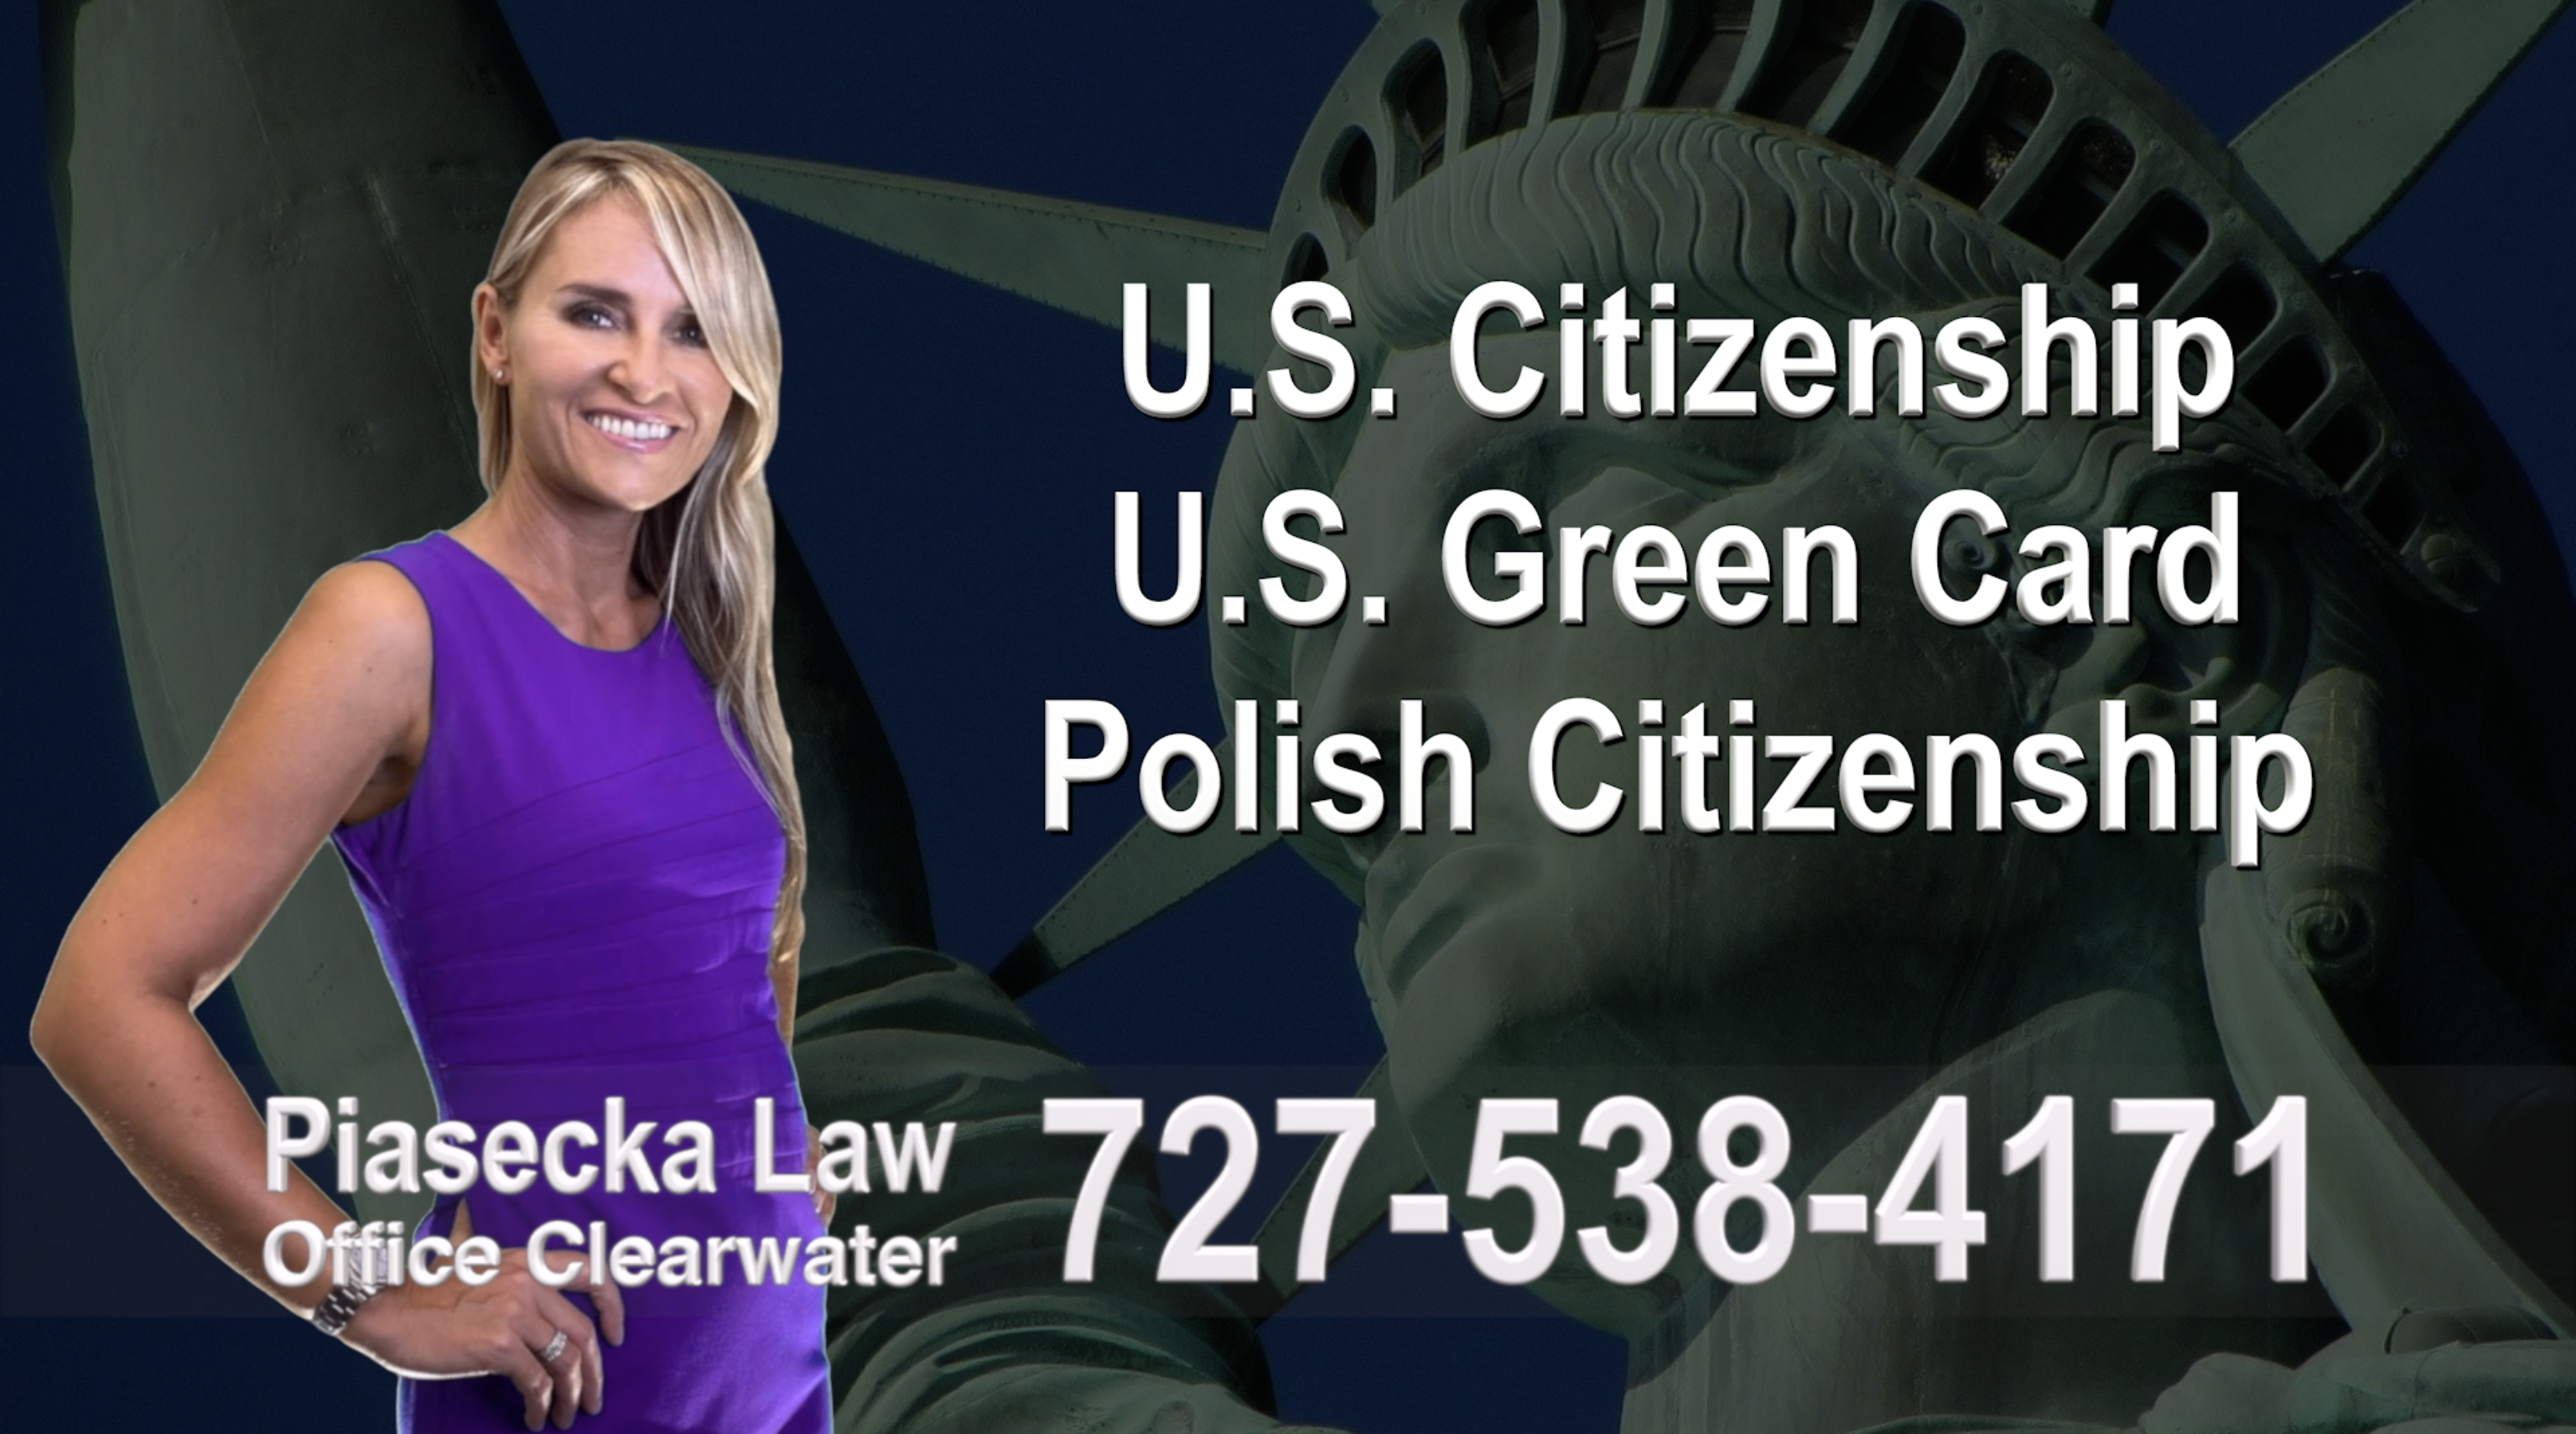 Clearwater Beach Immigration, U.S. Citizenship, U.S. Green Card, Polish Citizenship, Attorney, Lawyer, Agnieszka Piasecka, Aga Piasecka, Piasecka, Florida, US, USA, 12